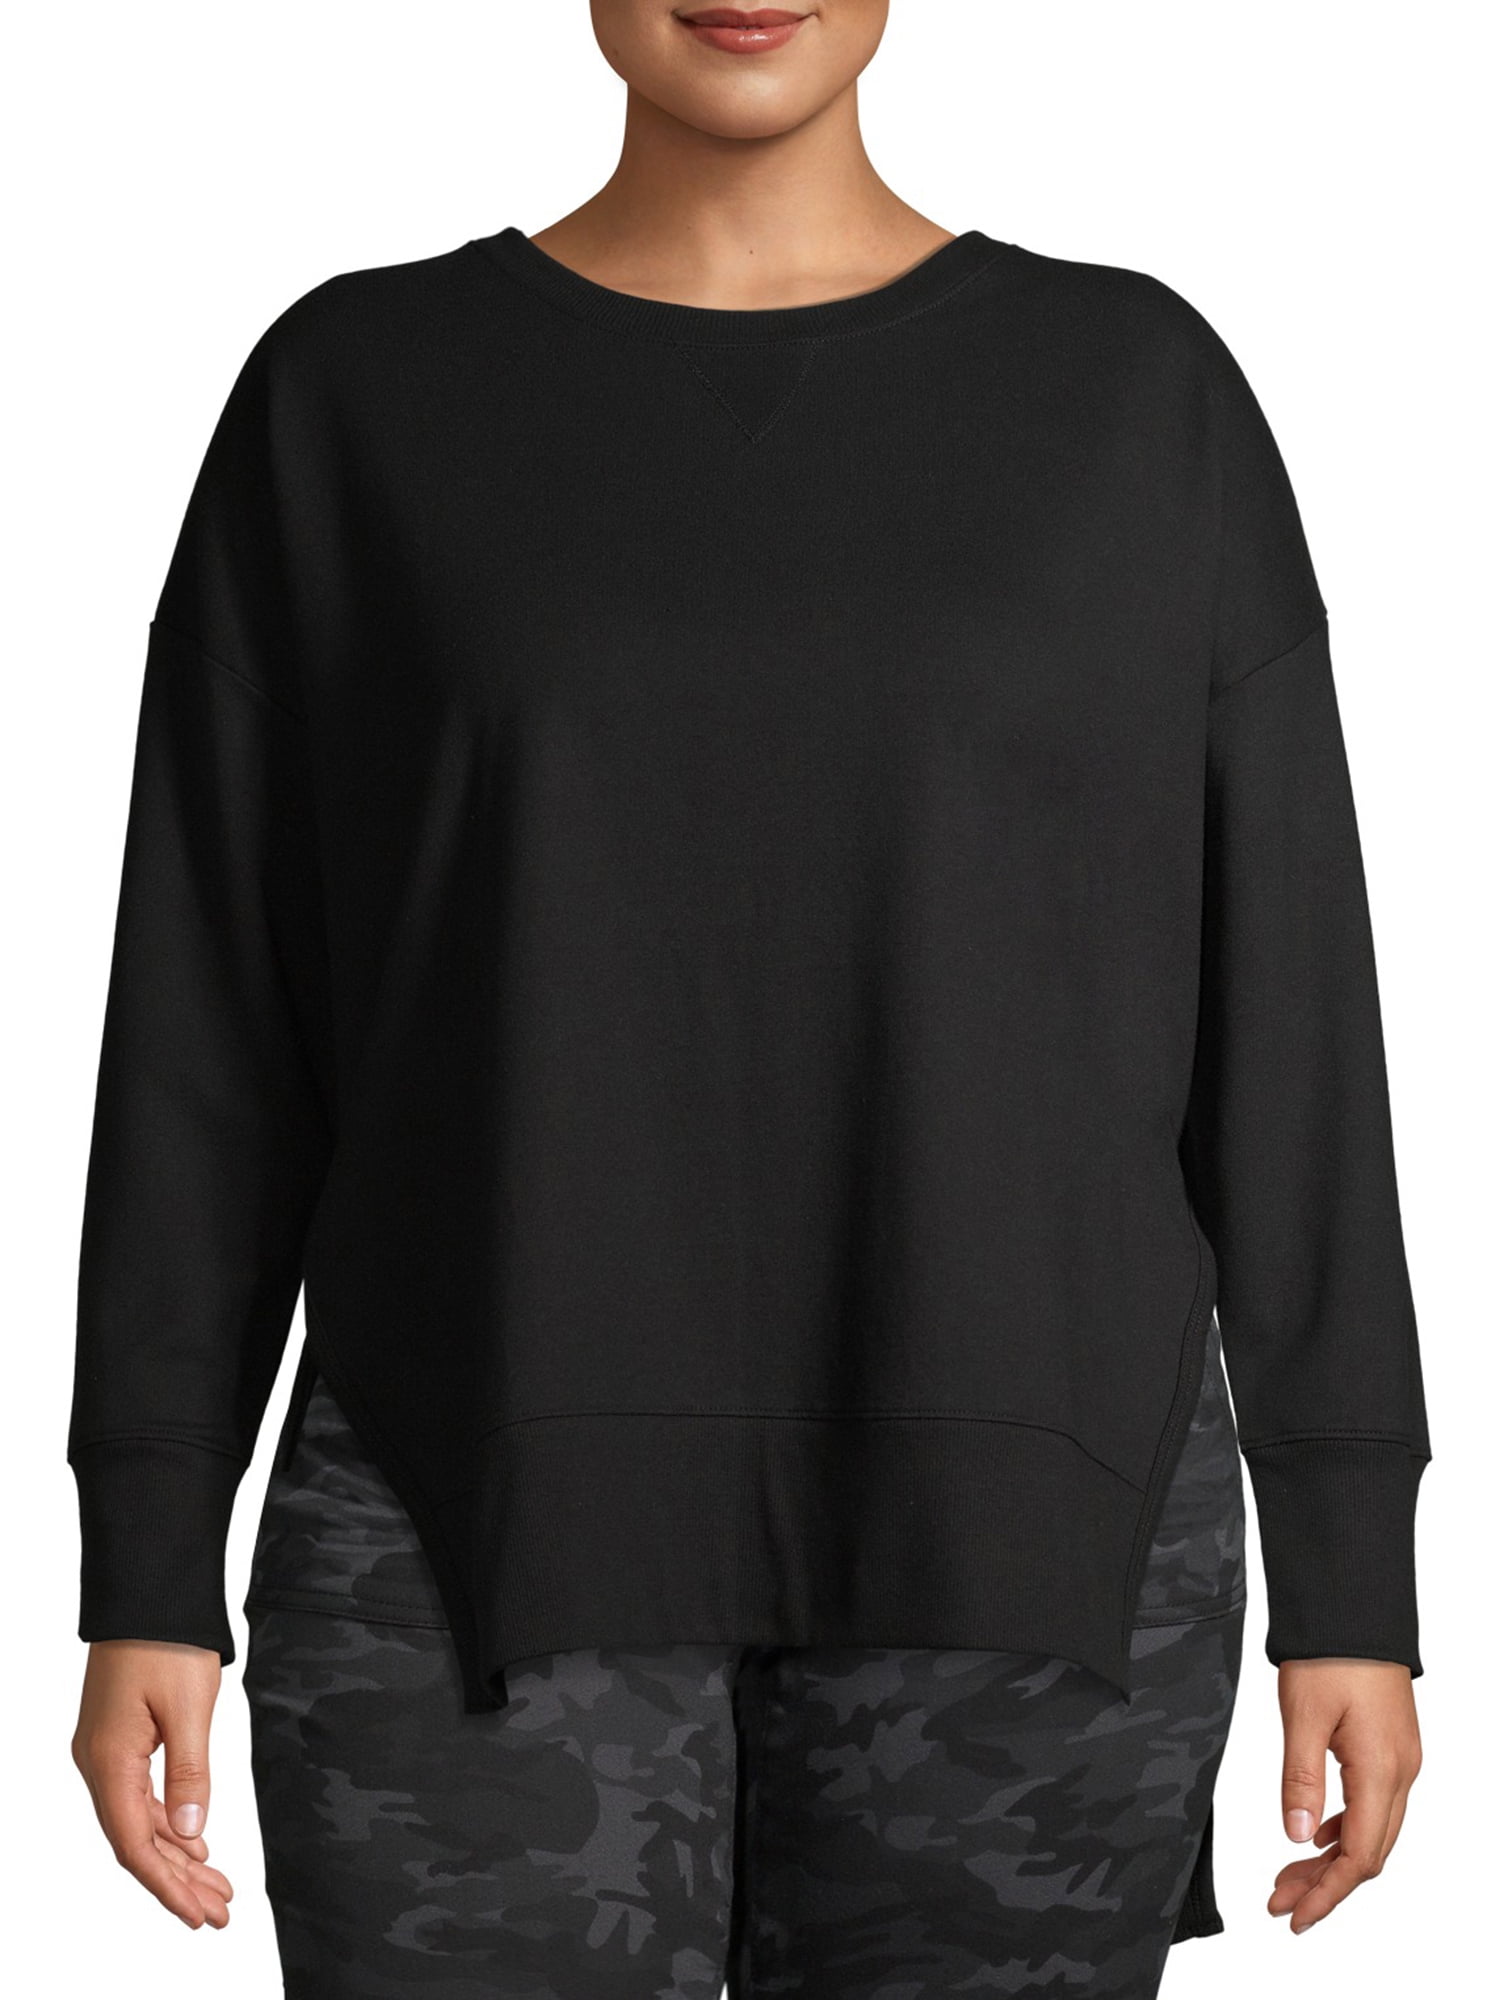 Terra & Sky Women's Plus Size French Terry Sweatshirt - Walmart.com